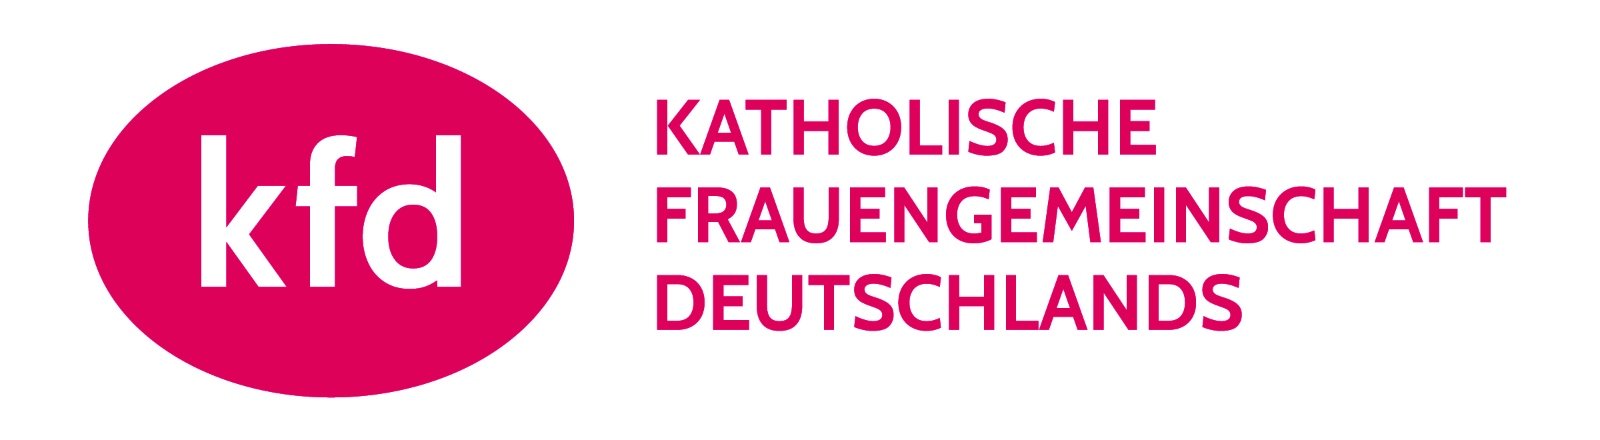 kfd_Logo_Purpur_sRGB (c) Katholische Frauengemeinschaft Deutschlands kfd